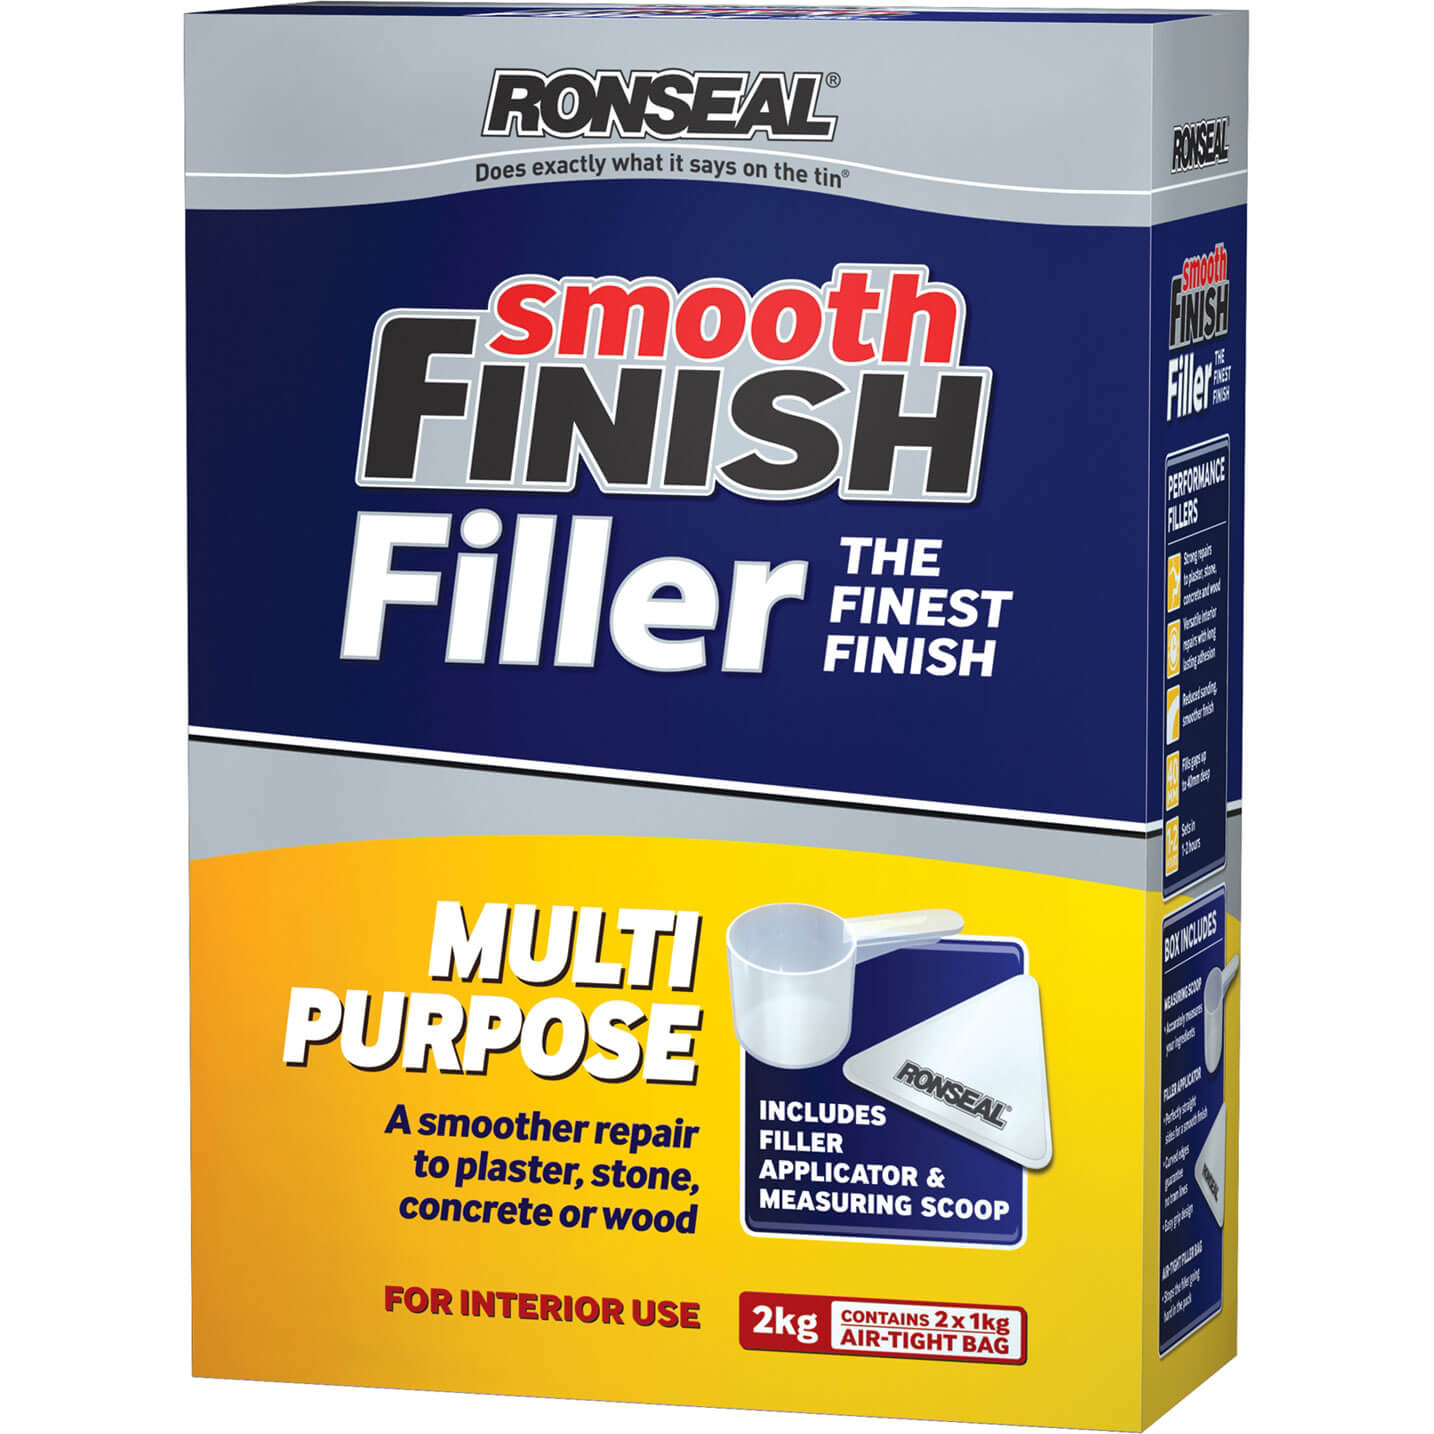 Image of Ronseal Smooth Finish Multi Purpose Interior Wall Powder Filler 2kg